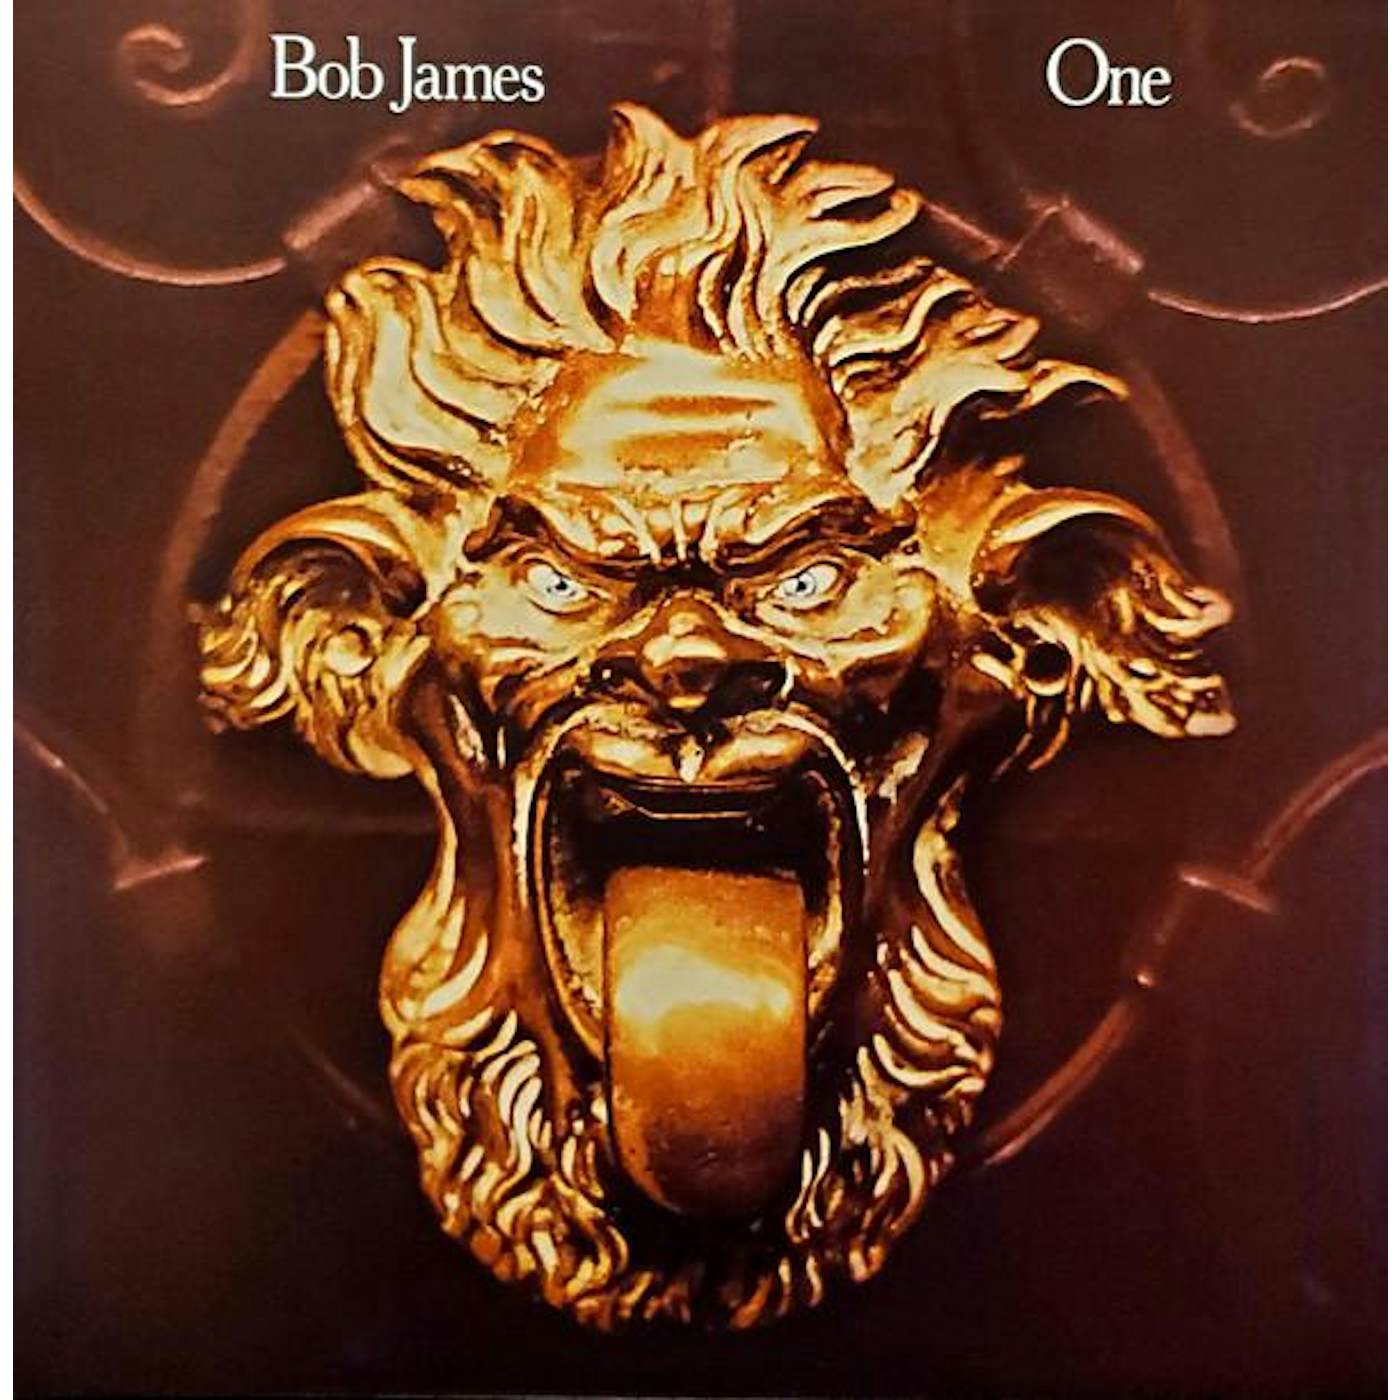 Bob James ONE (TRANSPARENT YELLOW VINYL/180G/REMASTERED/GATEFOLD) (I) Vinyl Record